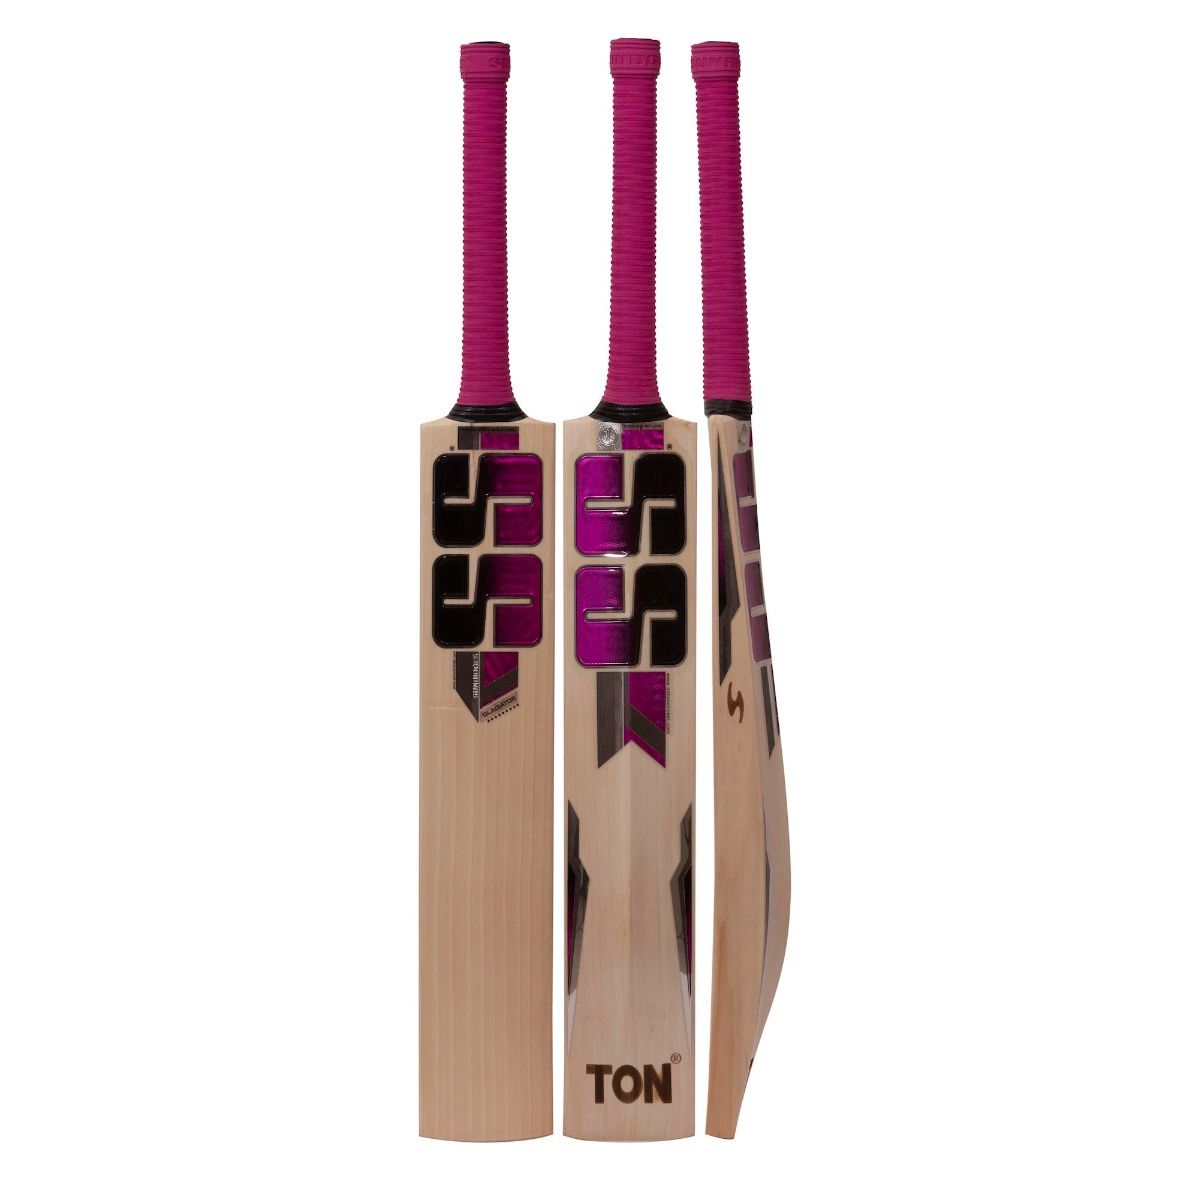 SS Ton Cricket Bat Gladiator Harrow English Willow Player's Edition